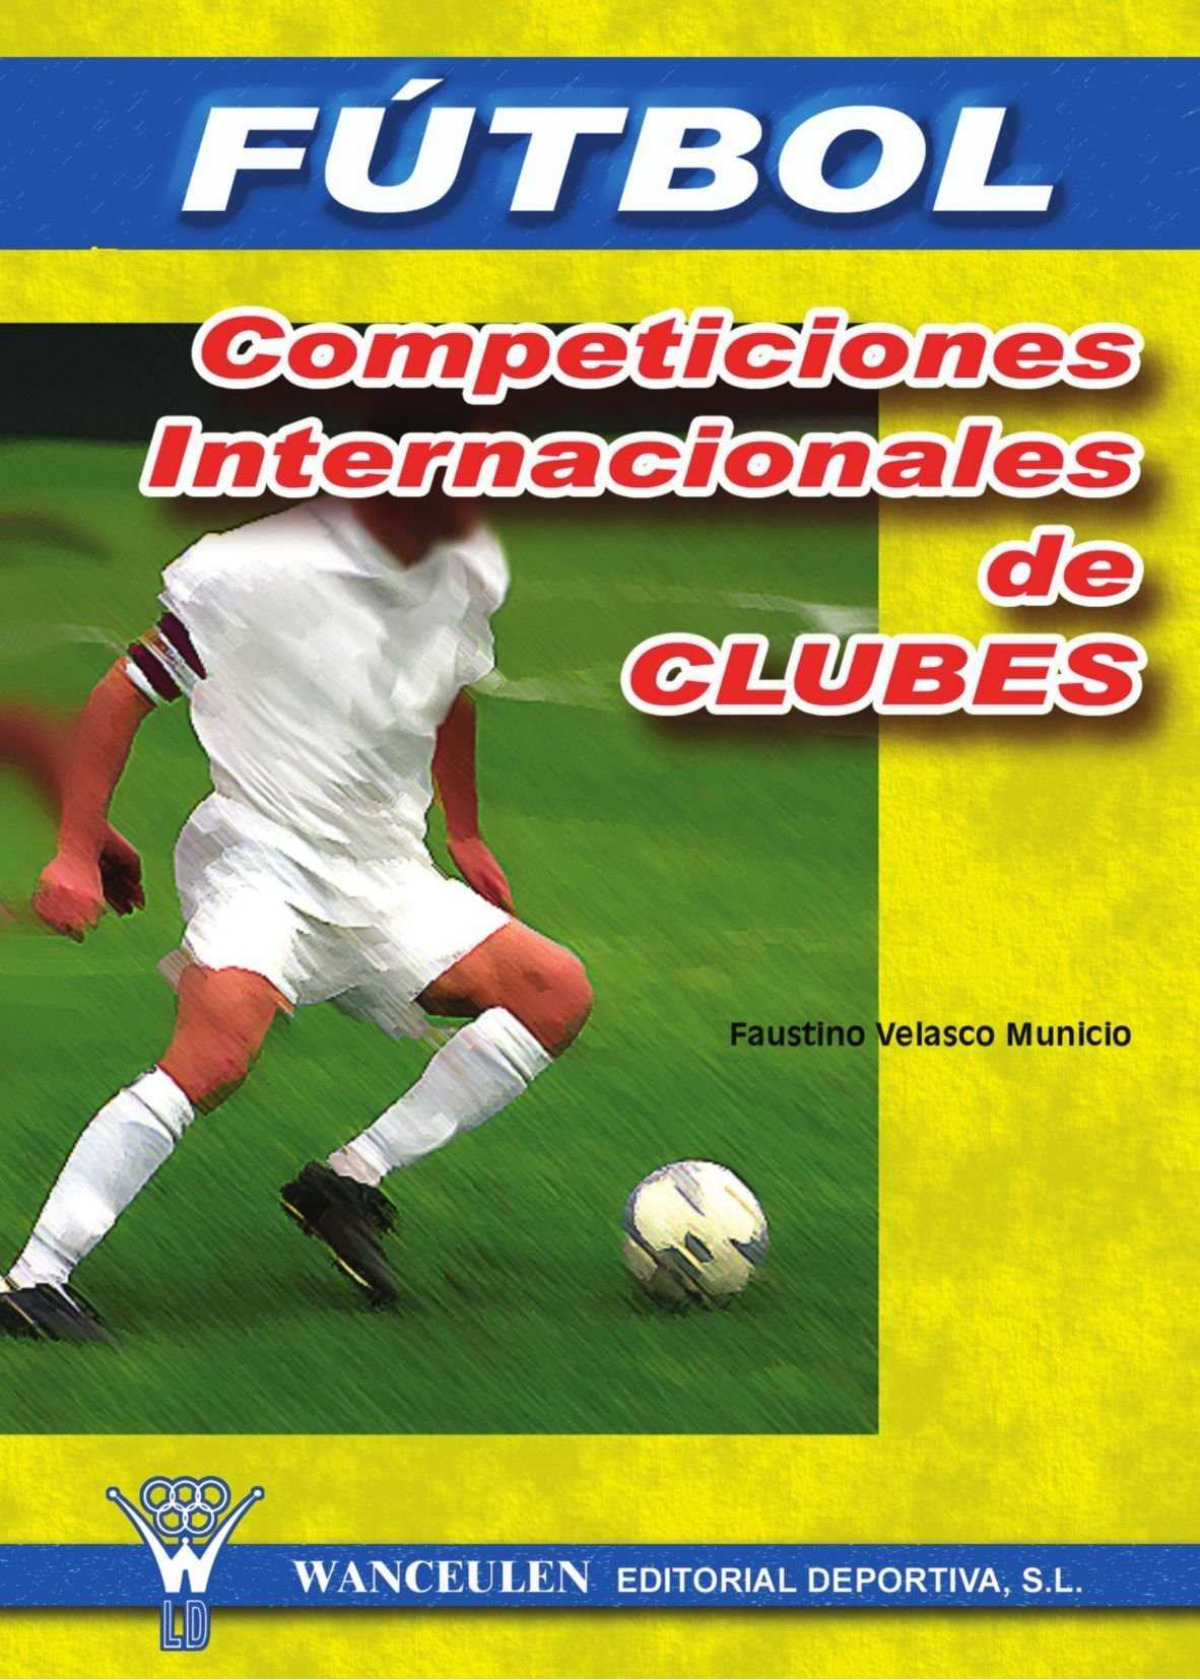 Futbol competiciones inter clubes - Valasco, Faustino